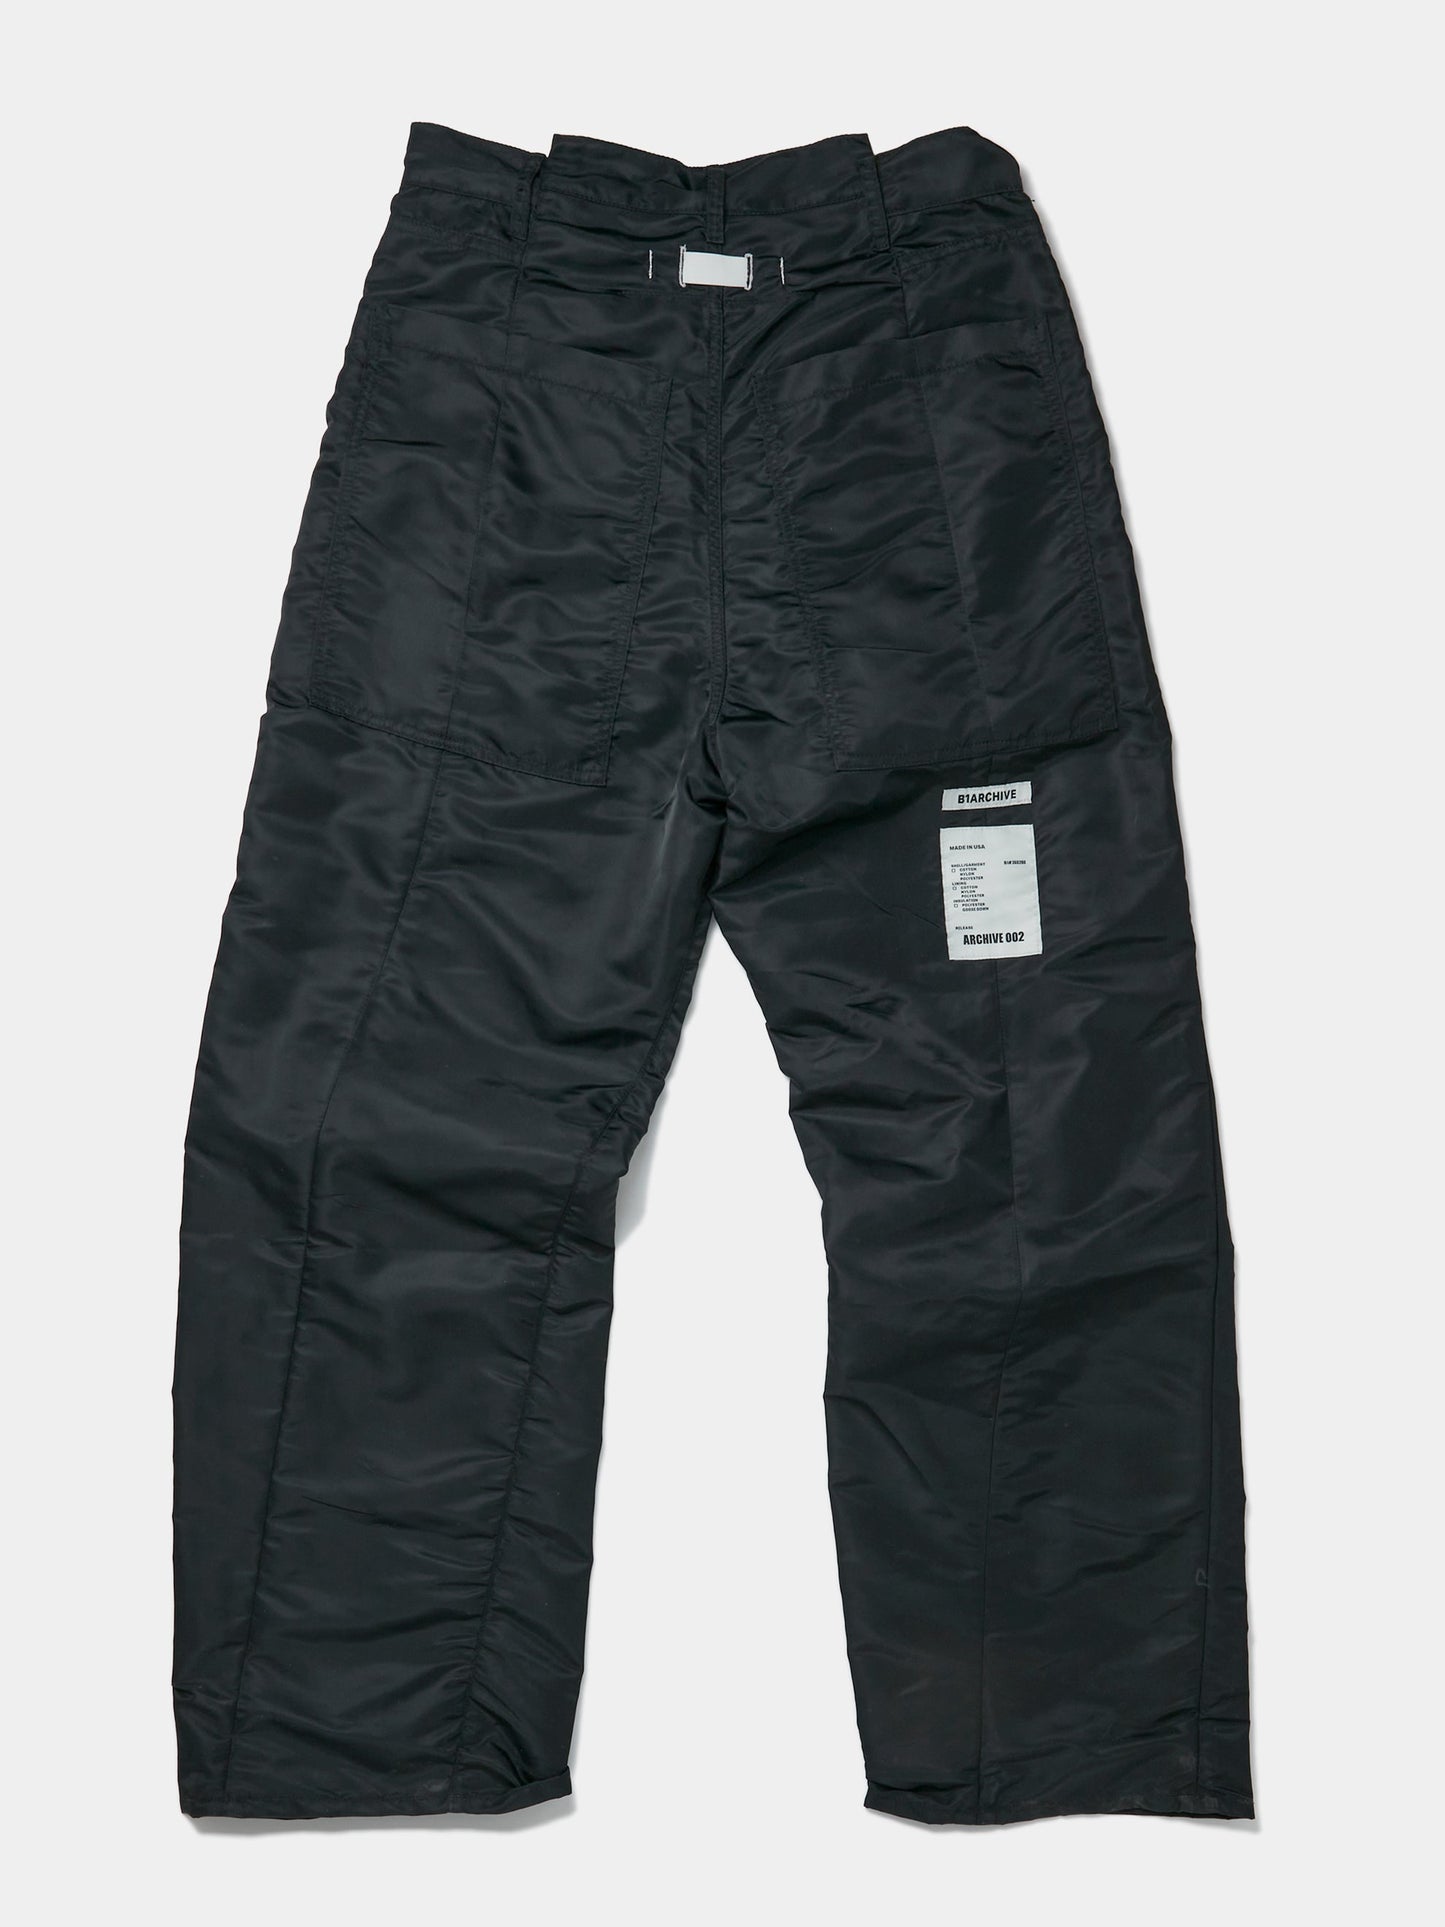 Wide Leg 5 Pocket Trouser (Black)